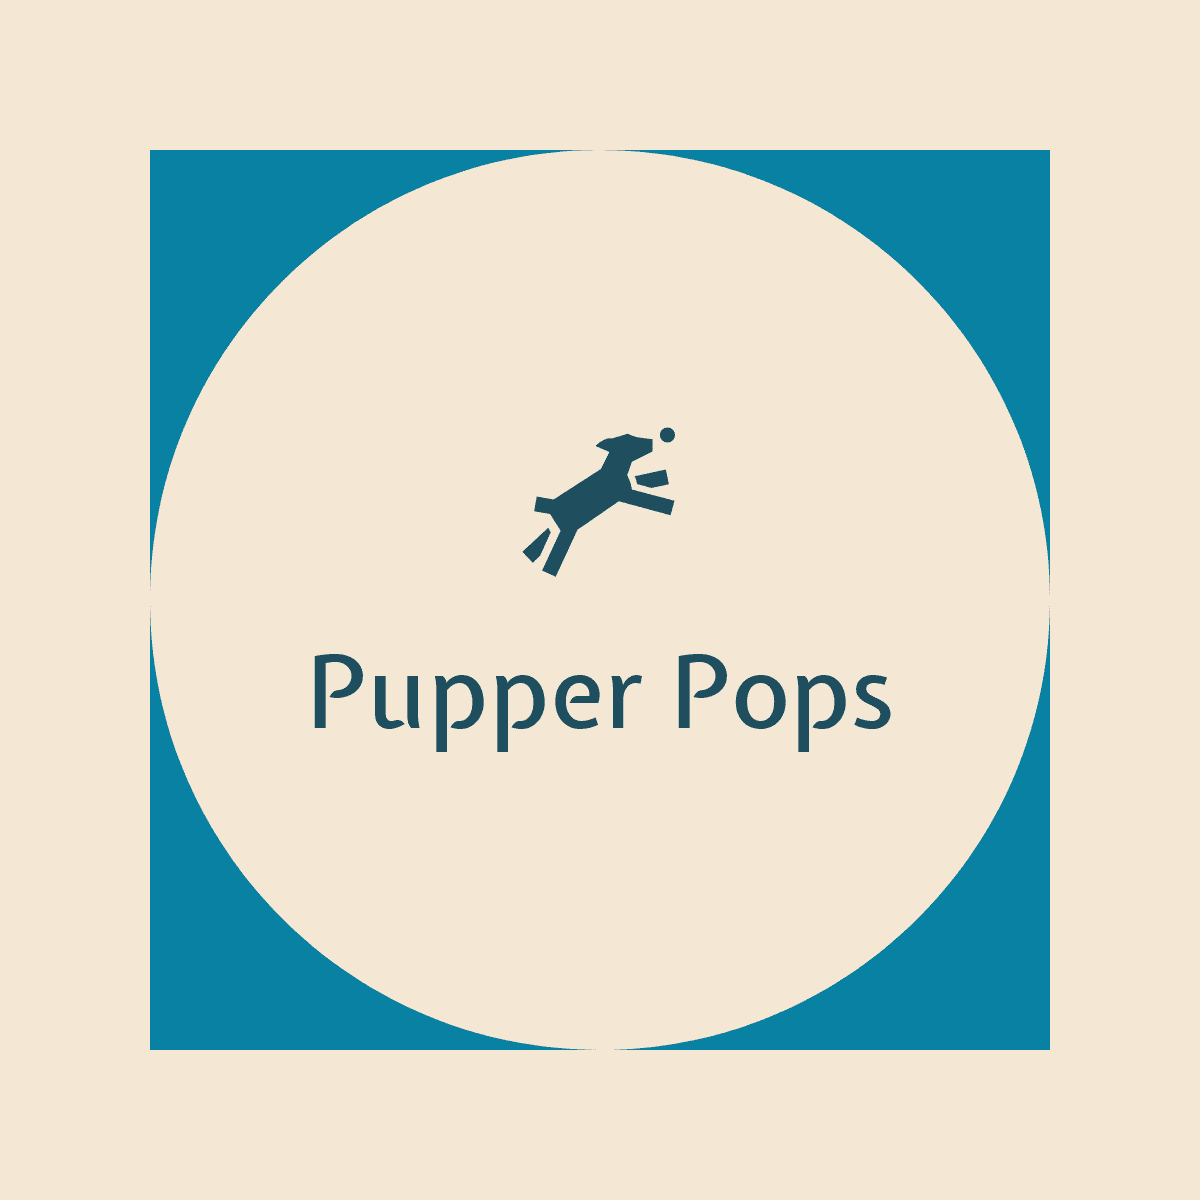 www.pupperpopstreats.com